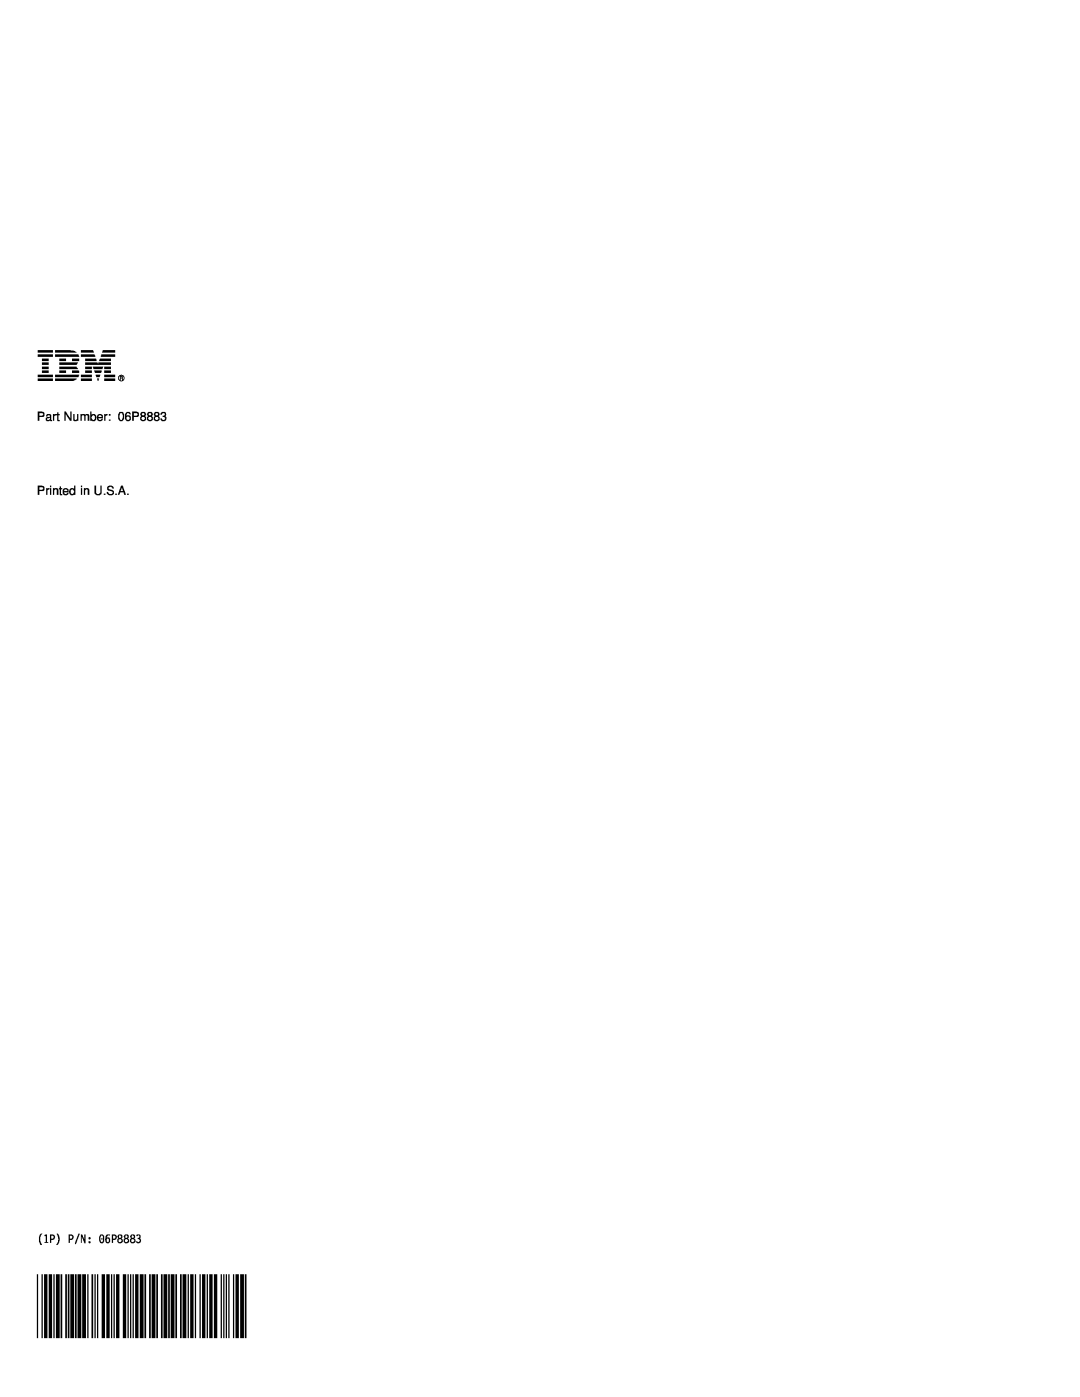 IBM MT 2632 manual Part Number 06P8883 Printed in U.S.A, 1P P/N 06P8883 